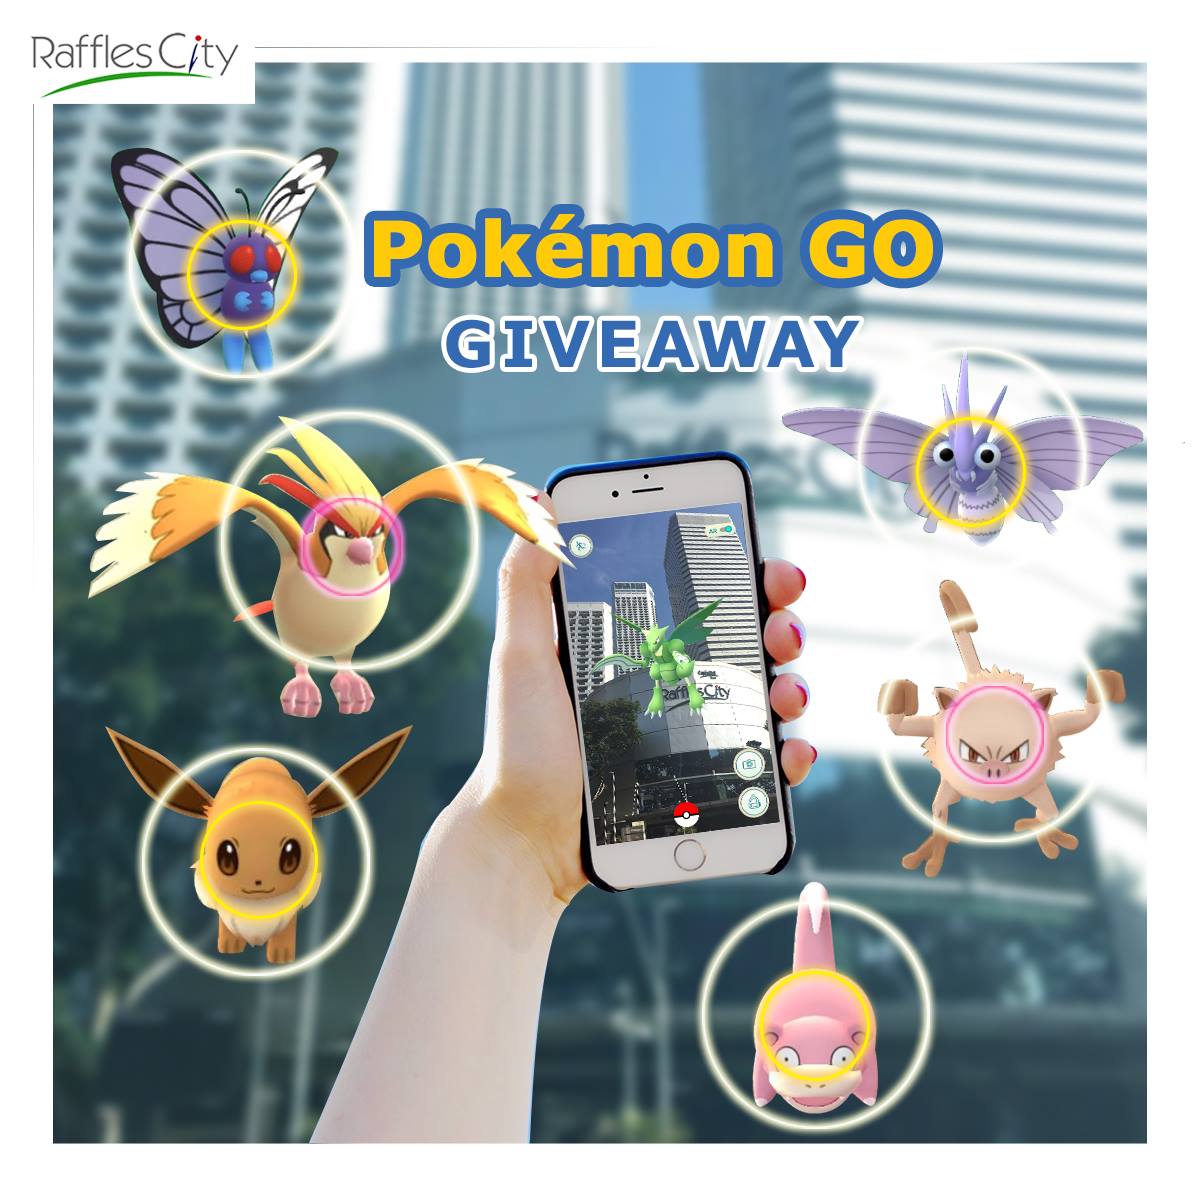 Raffles City Singapore Pokemon GO Giveaway Promotion 19 Aug to 1 Sep 2016